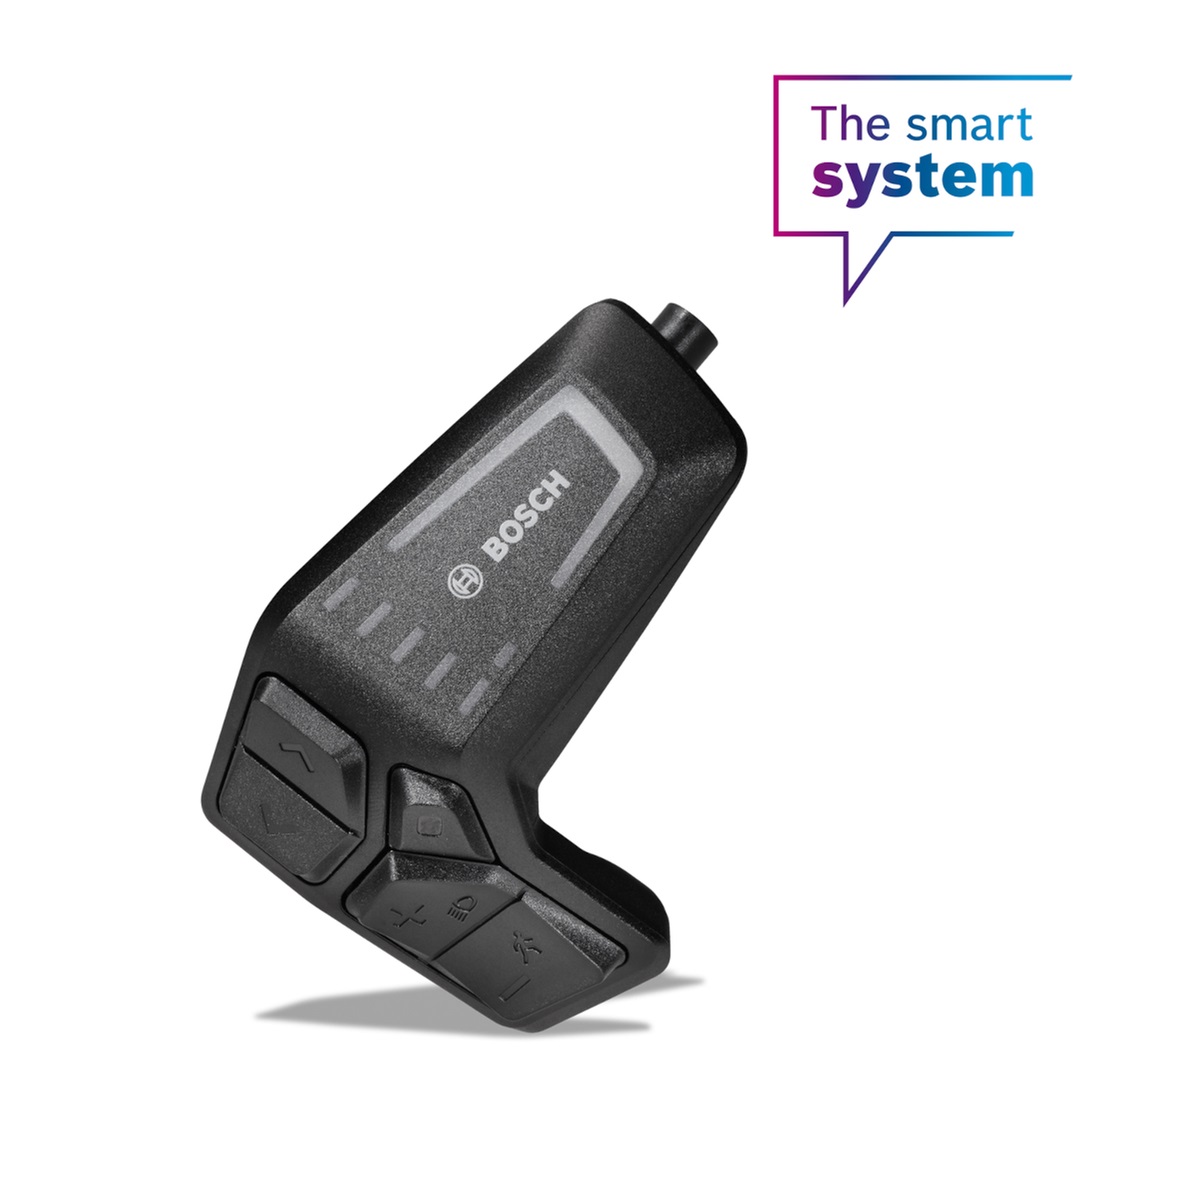 Bosch LED Remote Kiox The smart system